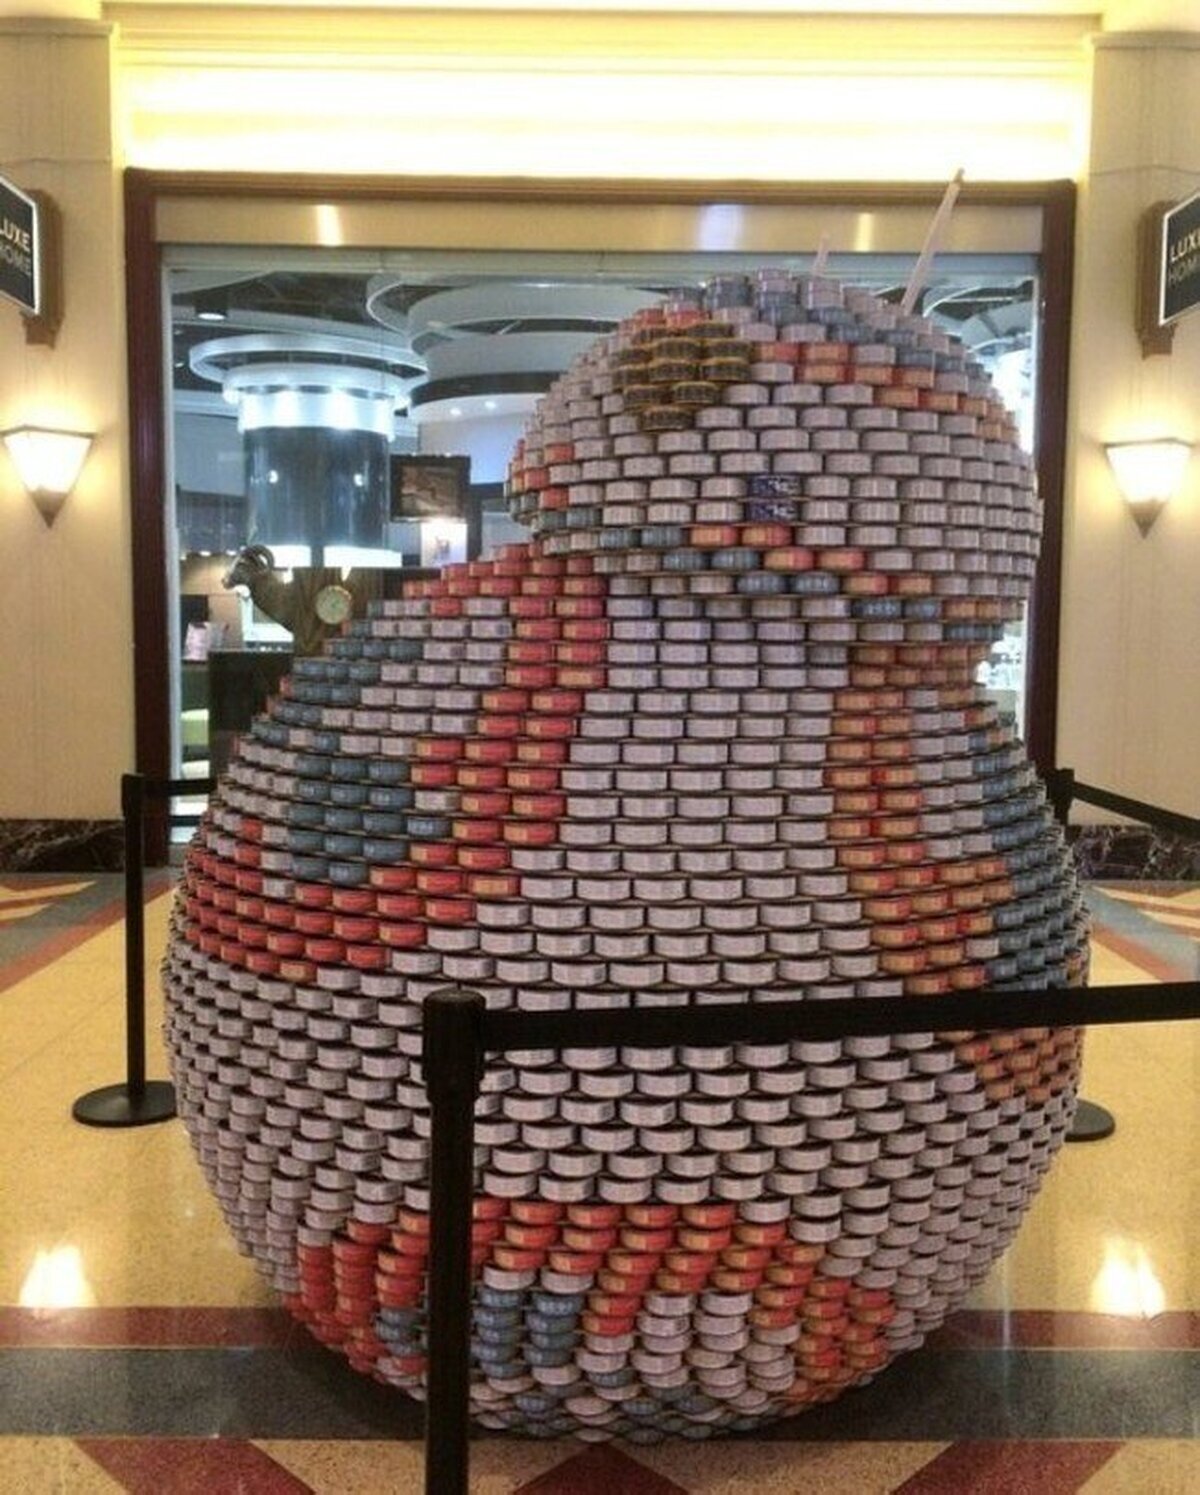 Una manera original de almacenar latas de atún